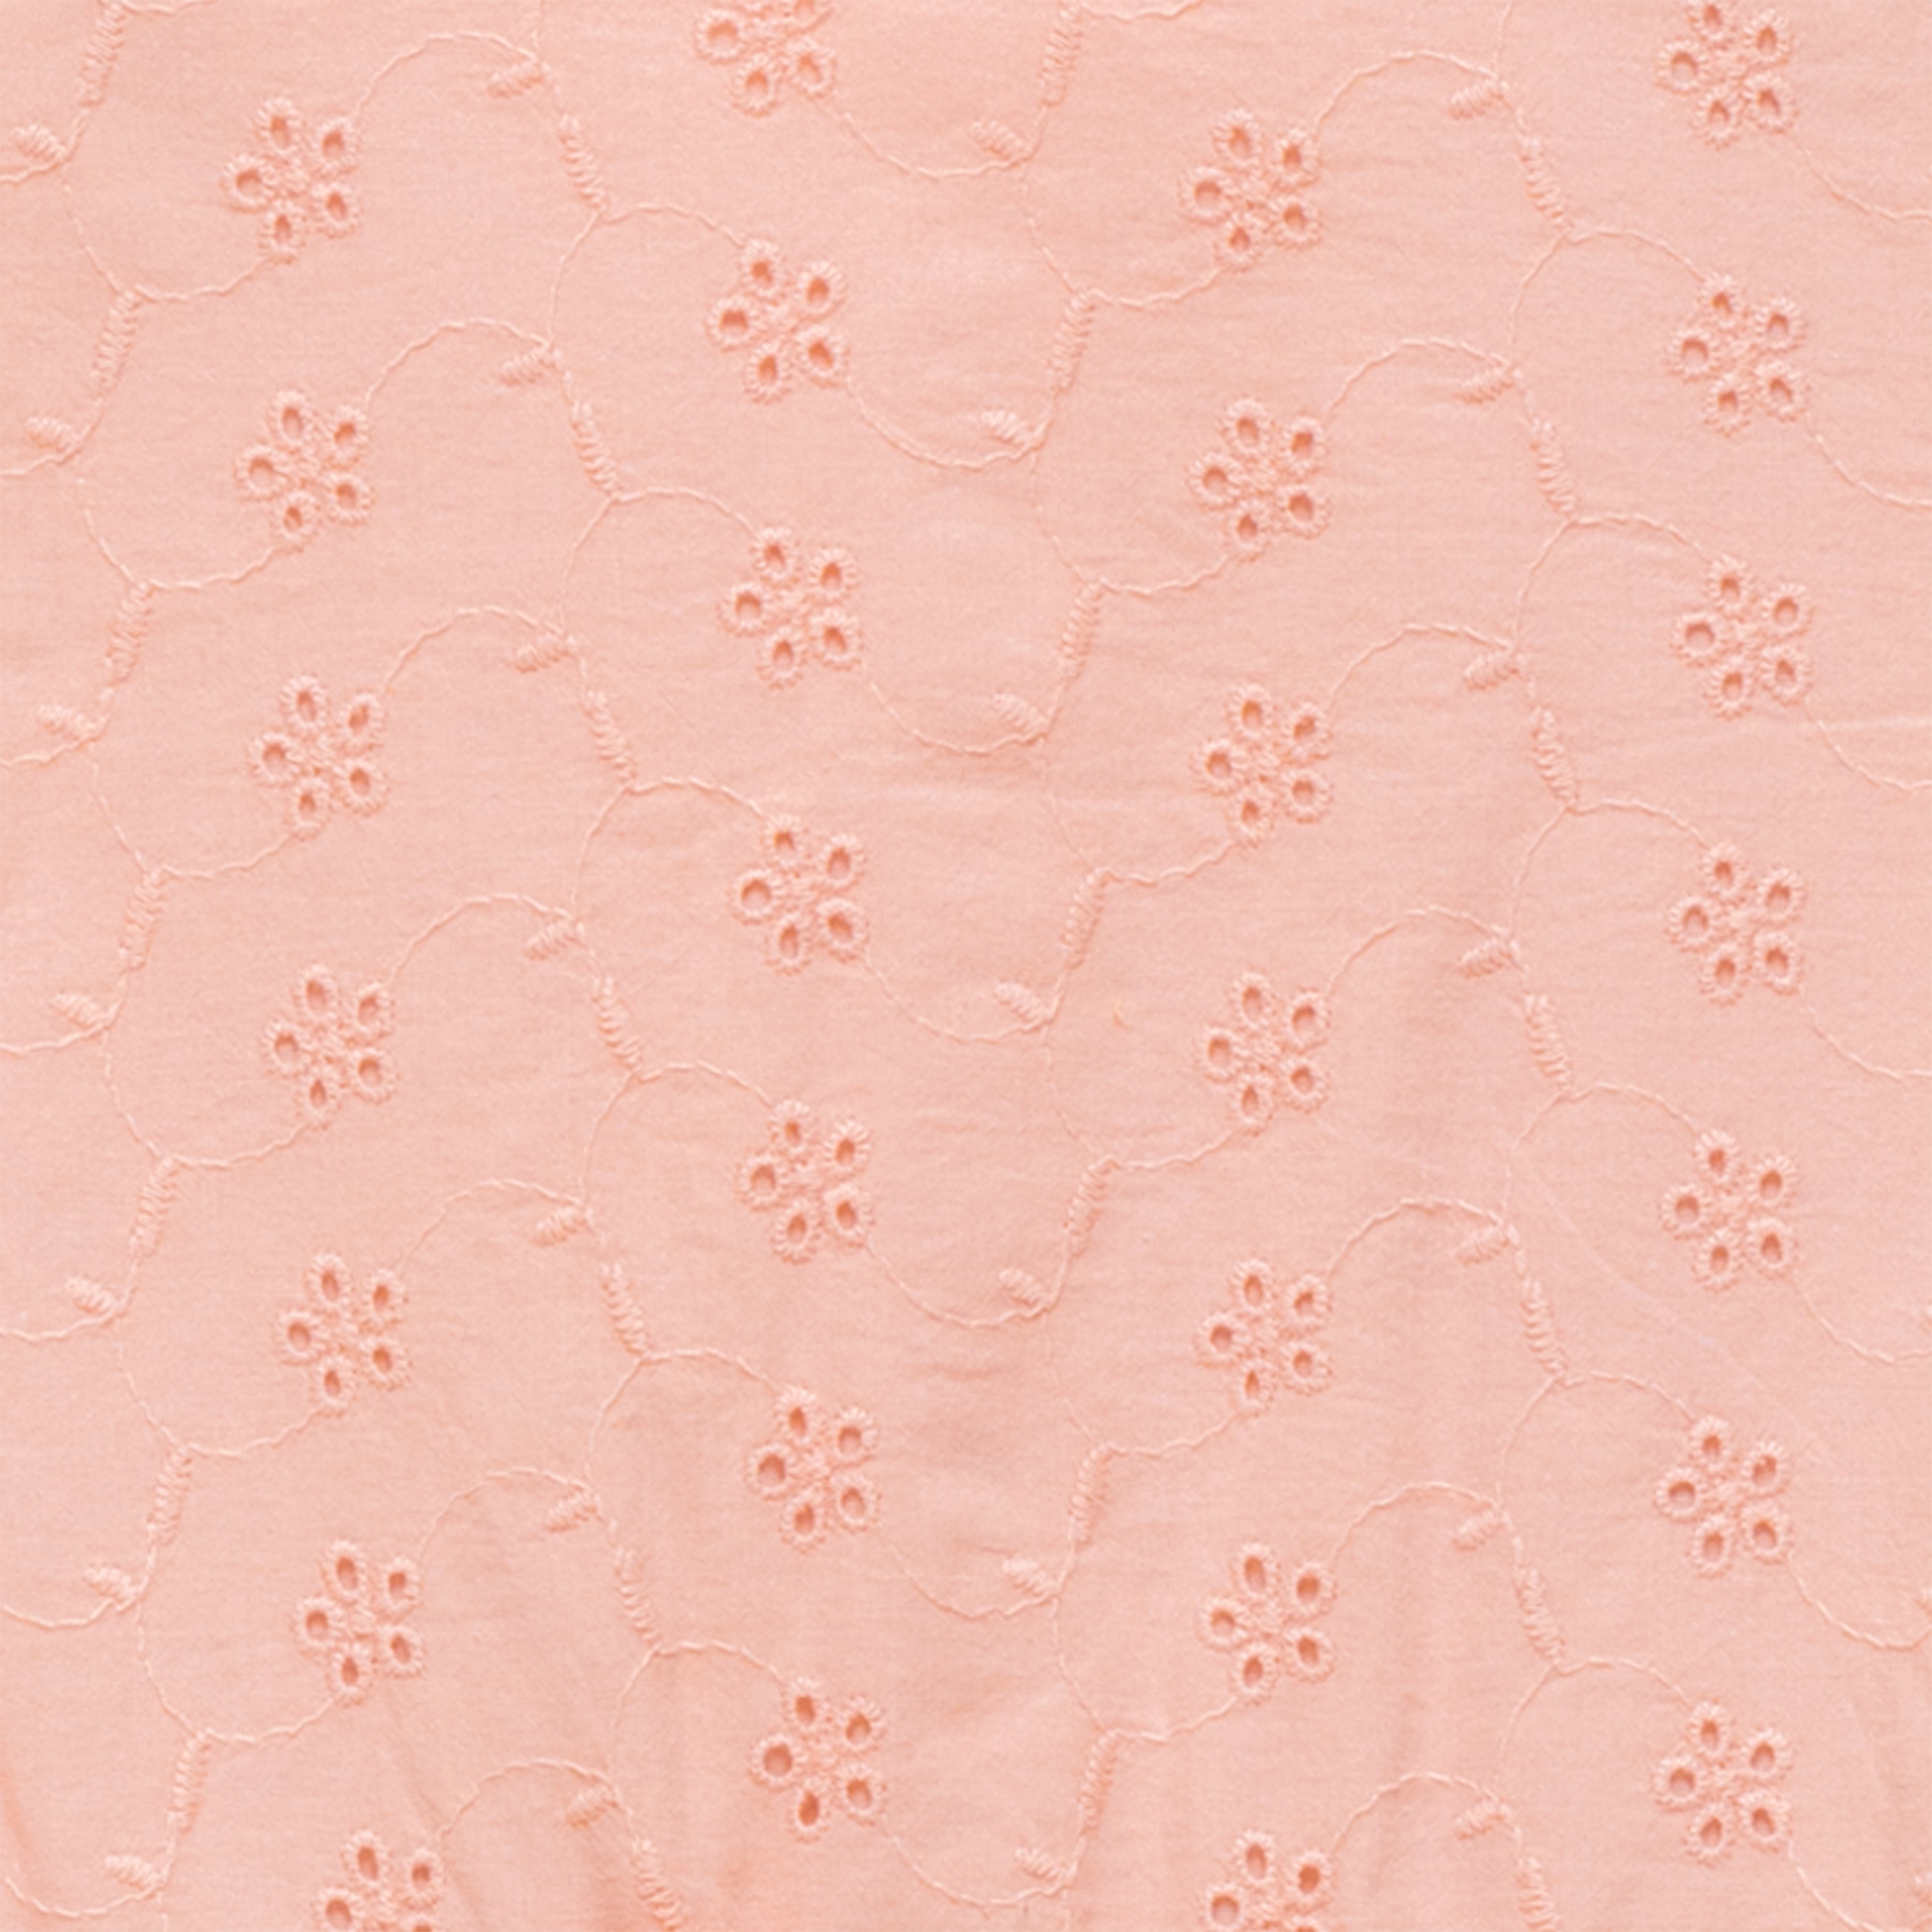 Girls Schiffli Cotton Puff Sleeve Bow Detail Dress - Pink